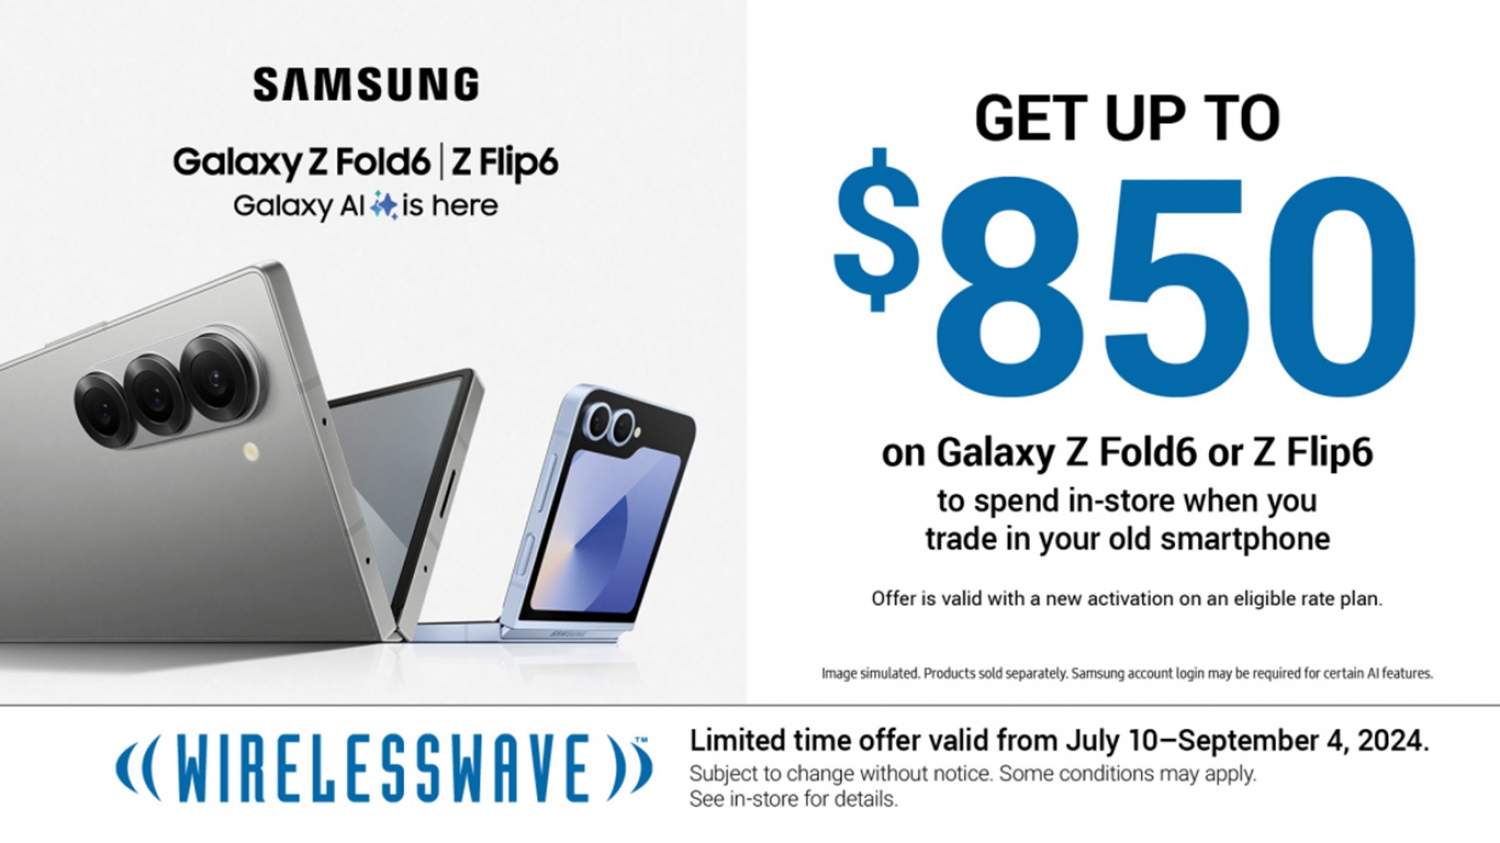 Get up to $850 on Galaxy Z Fold6 or Z Flip6